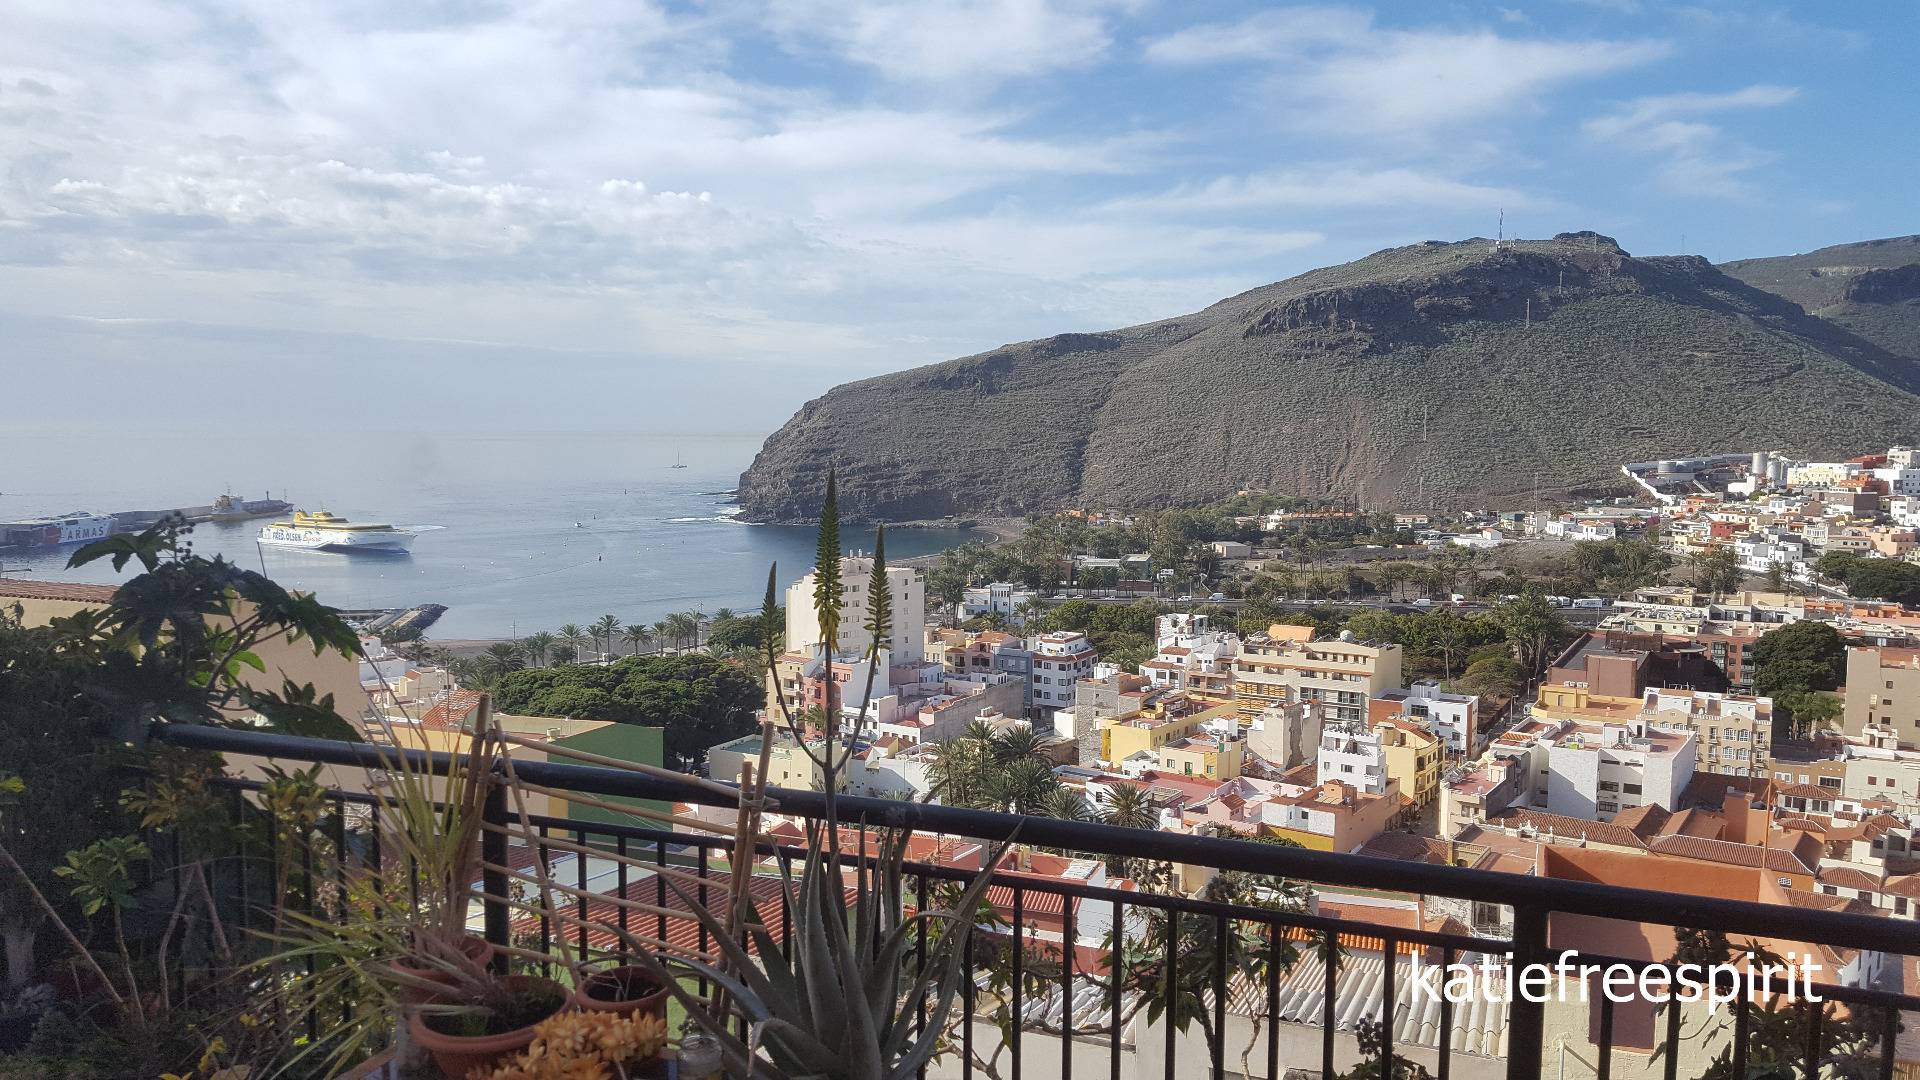 San Sebastian, a beautiful Spanish town on the island of Gomera - one of the Canary Islands.